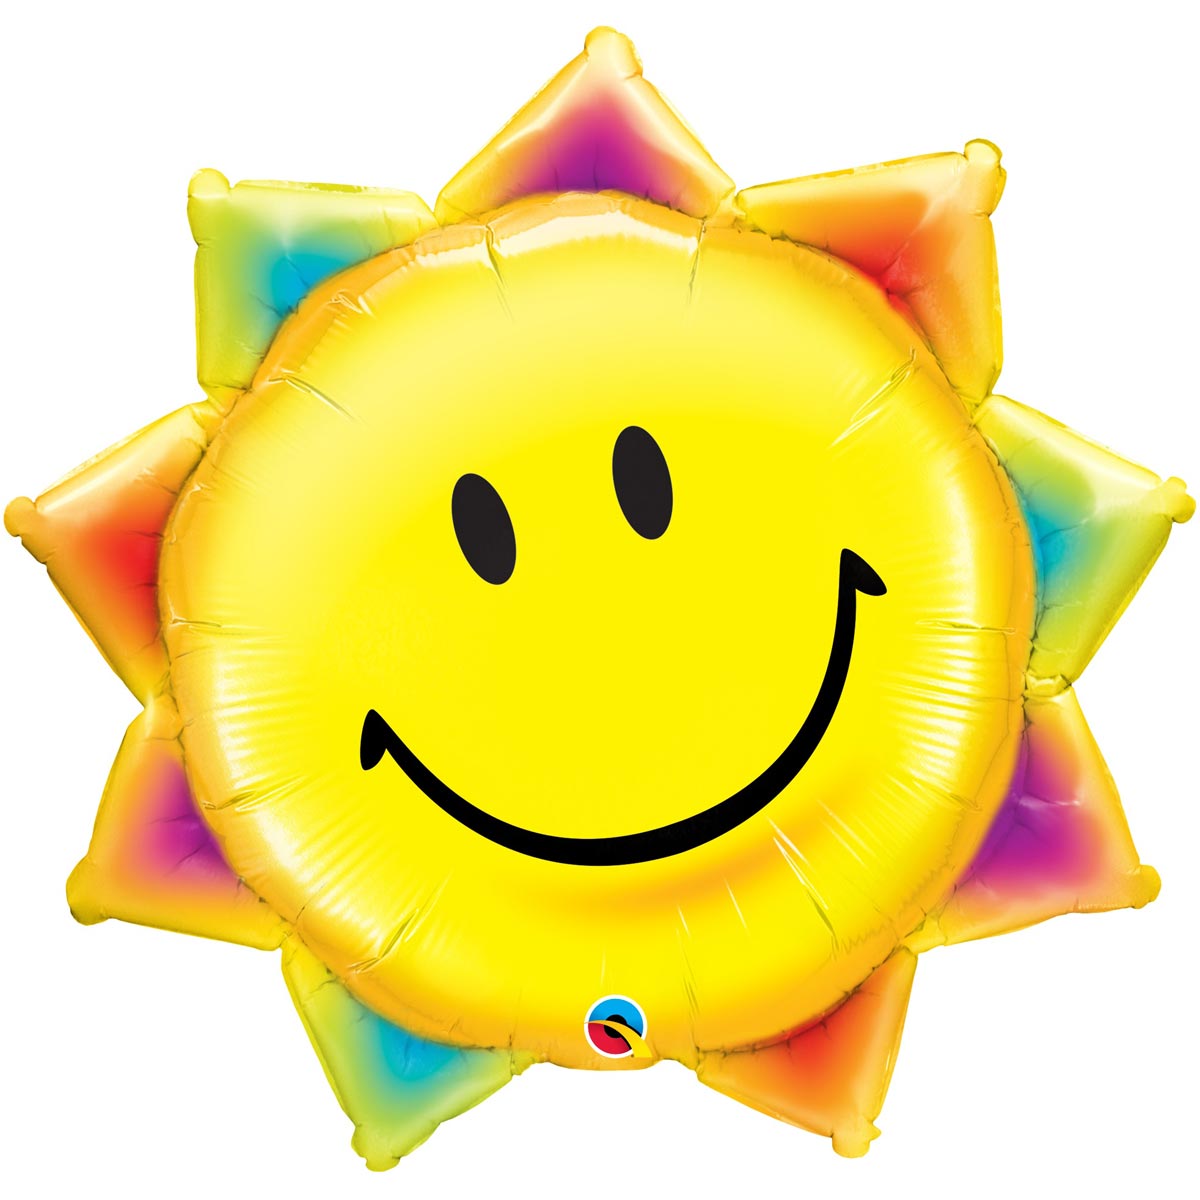 p26531-smiley-sunshine-metallic-balloon-000.ashx